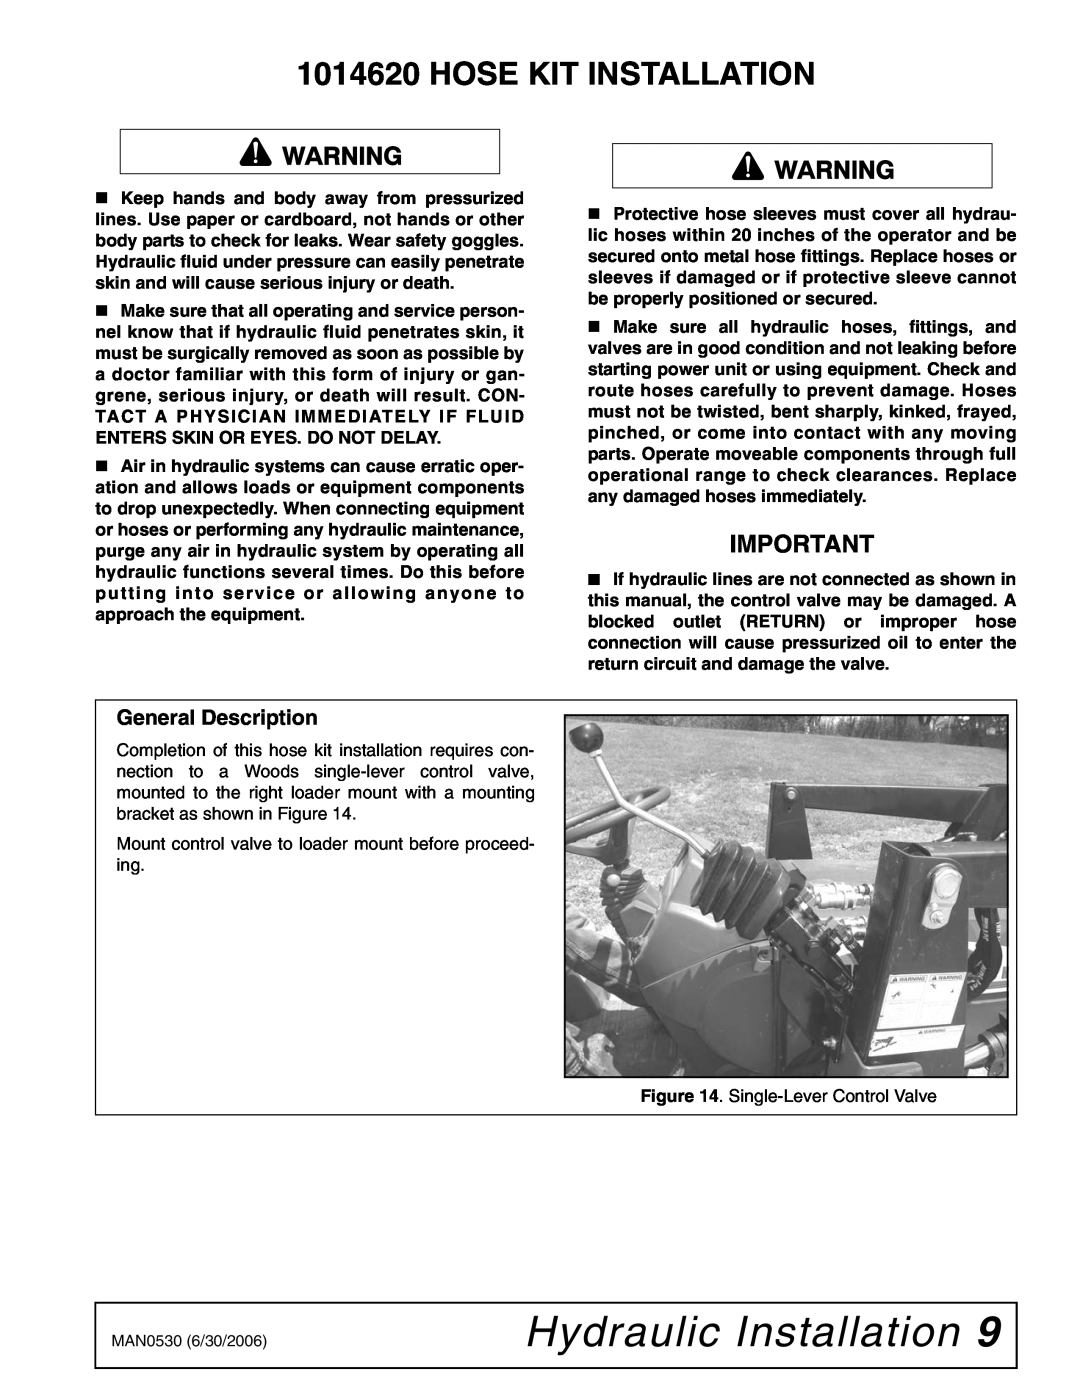 Woods Equipment 211718 installation manual Hydraulic Installation, General Description 